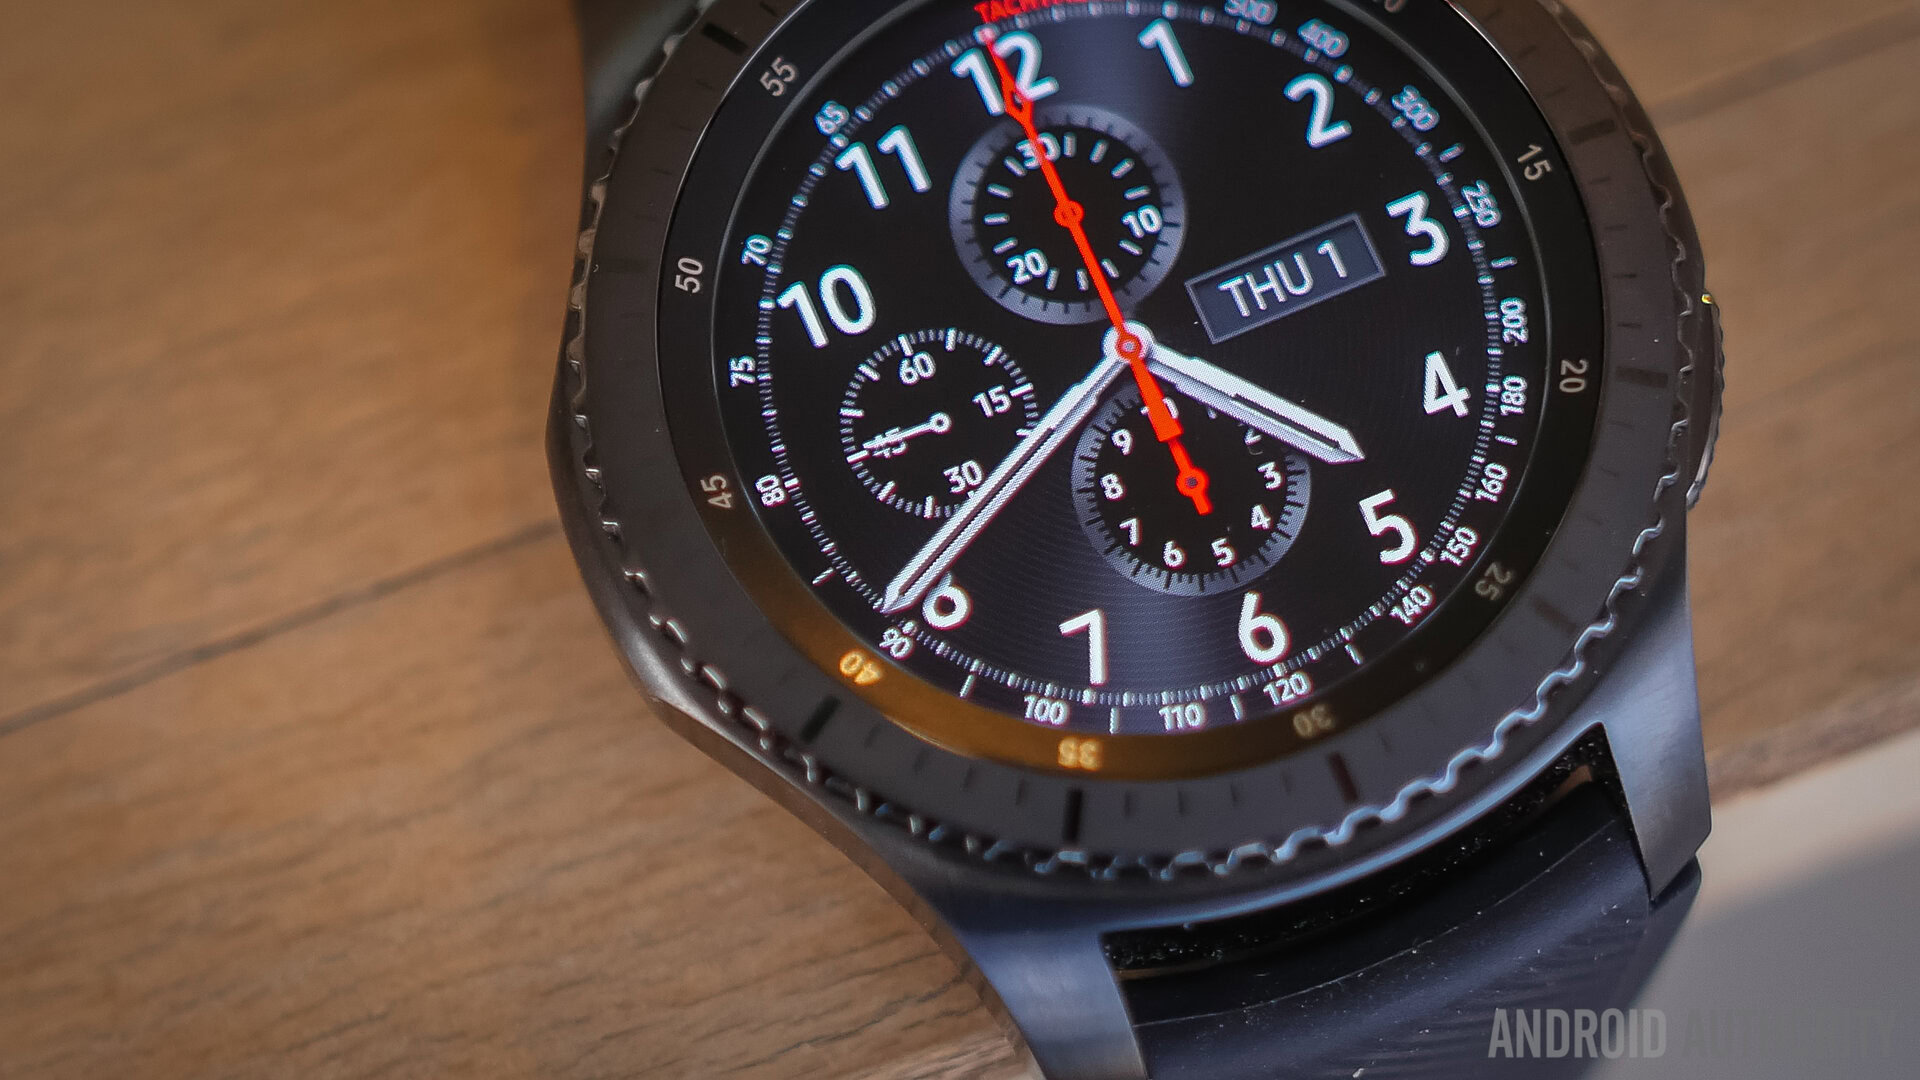 lytter ugentlig Fremskridt Samsung Gear S3 review - evolution of a smartwatch! - Android Authority